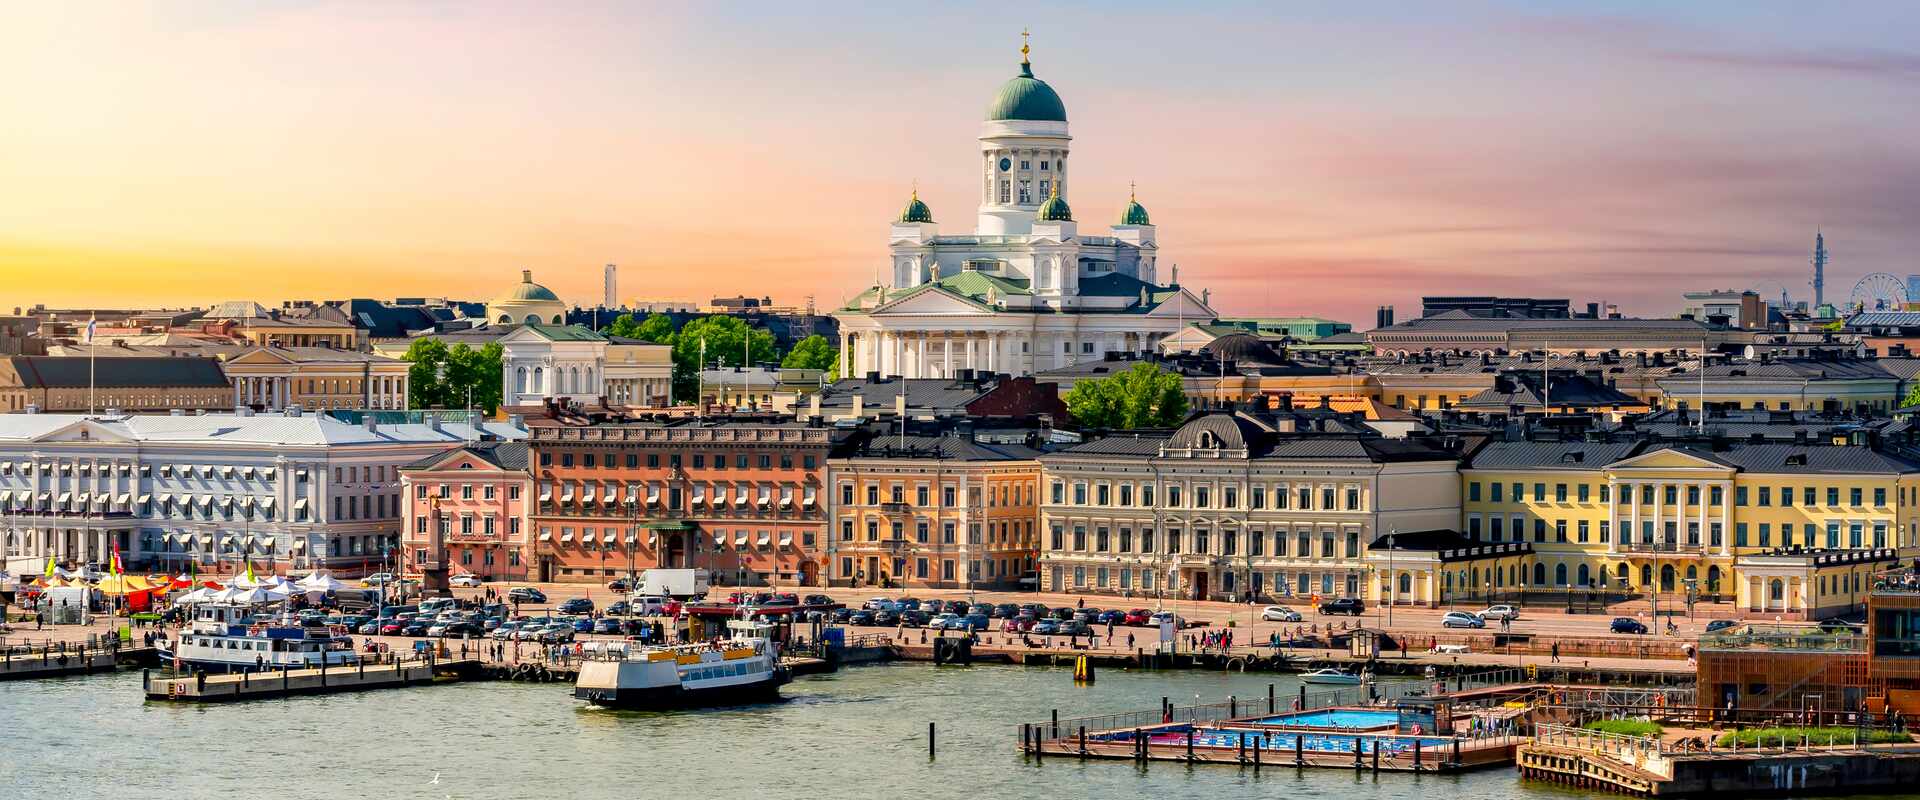 Helsinki skyline, Finland